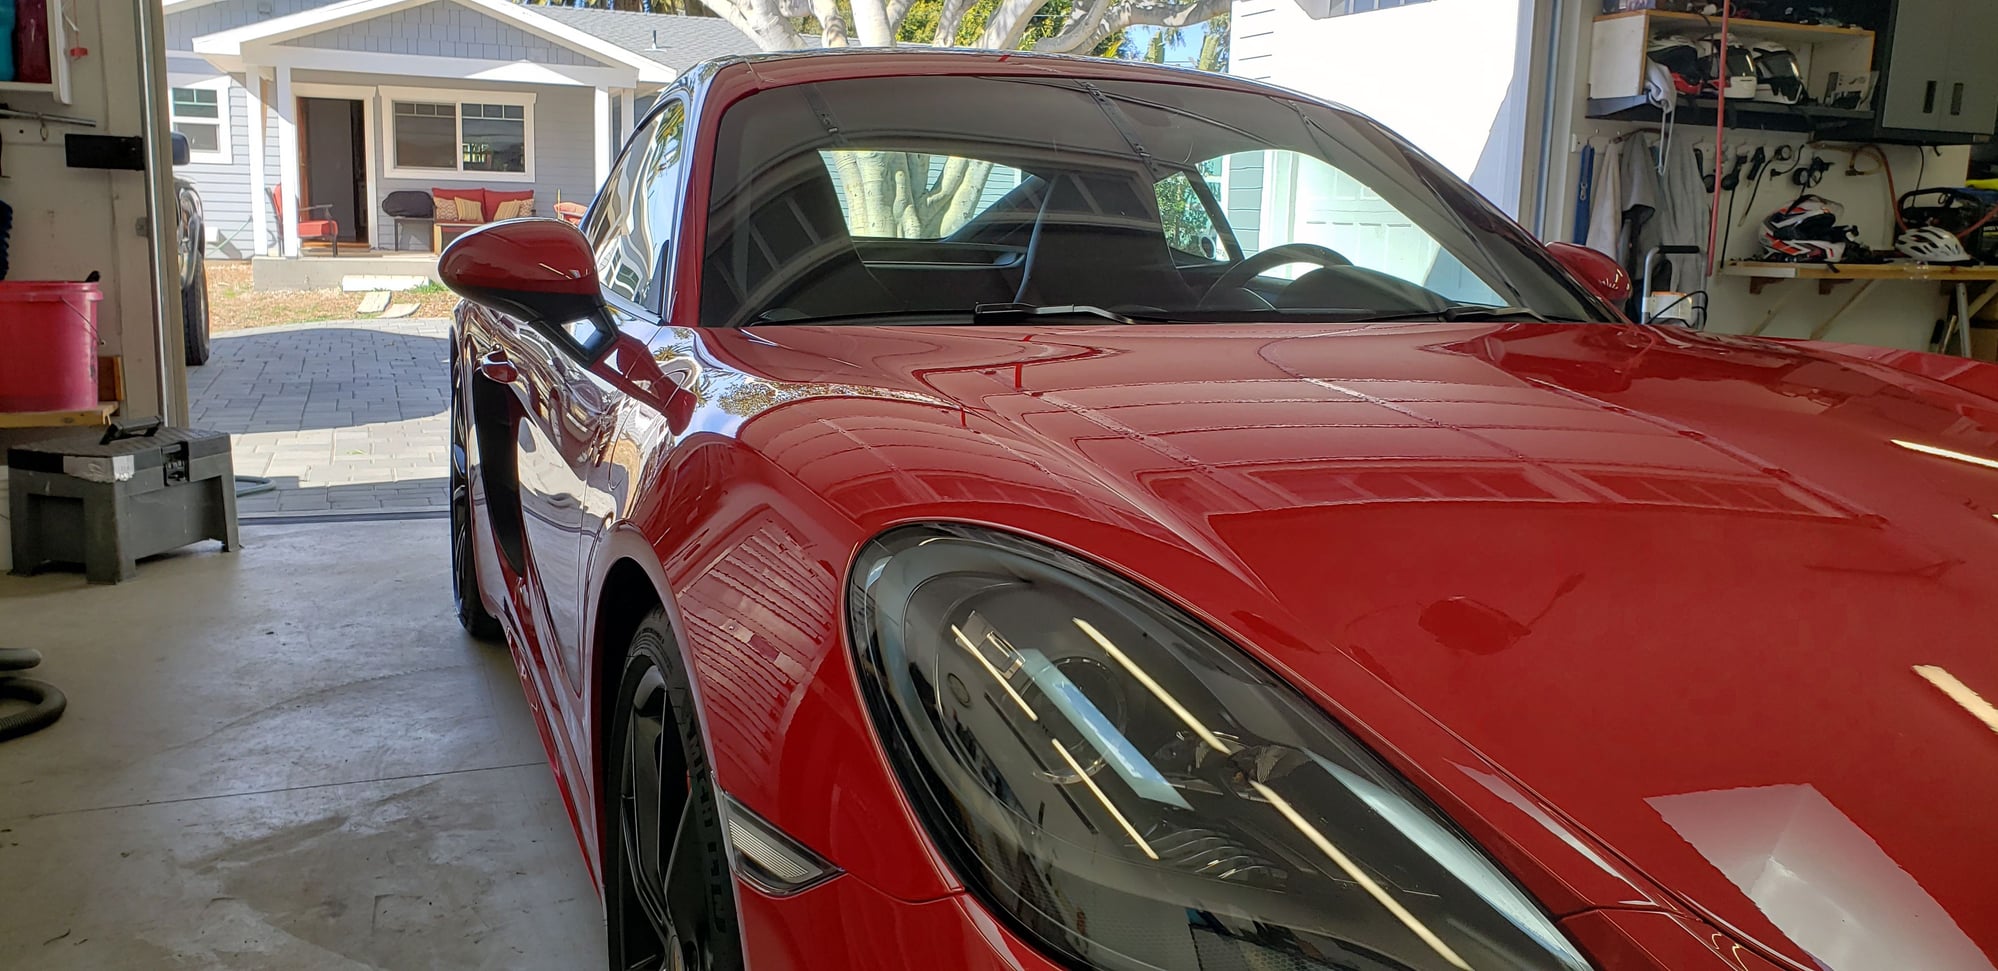 2018 Porsche 718 Cayman - 2018 Cayman GTS, CPO, 6sp manual, Carmine Red $83,500 - Used - San Diego, CA 92008, United States